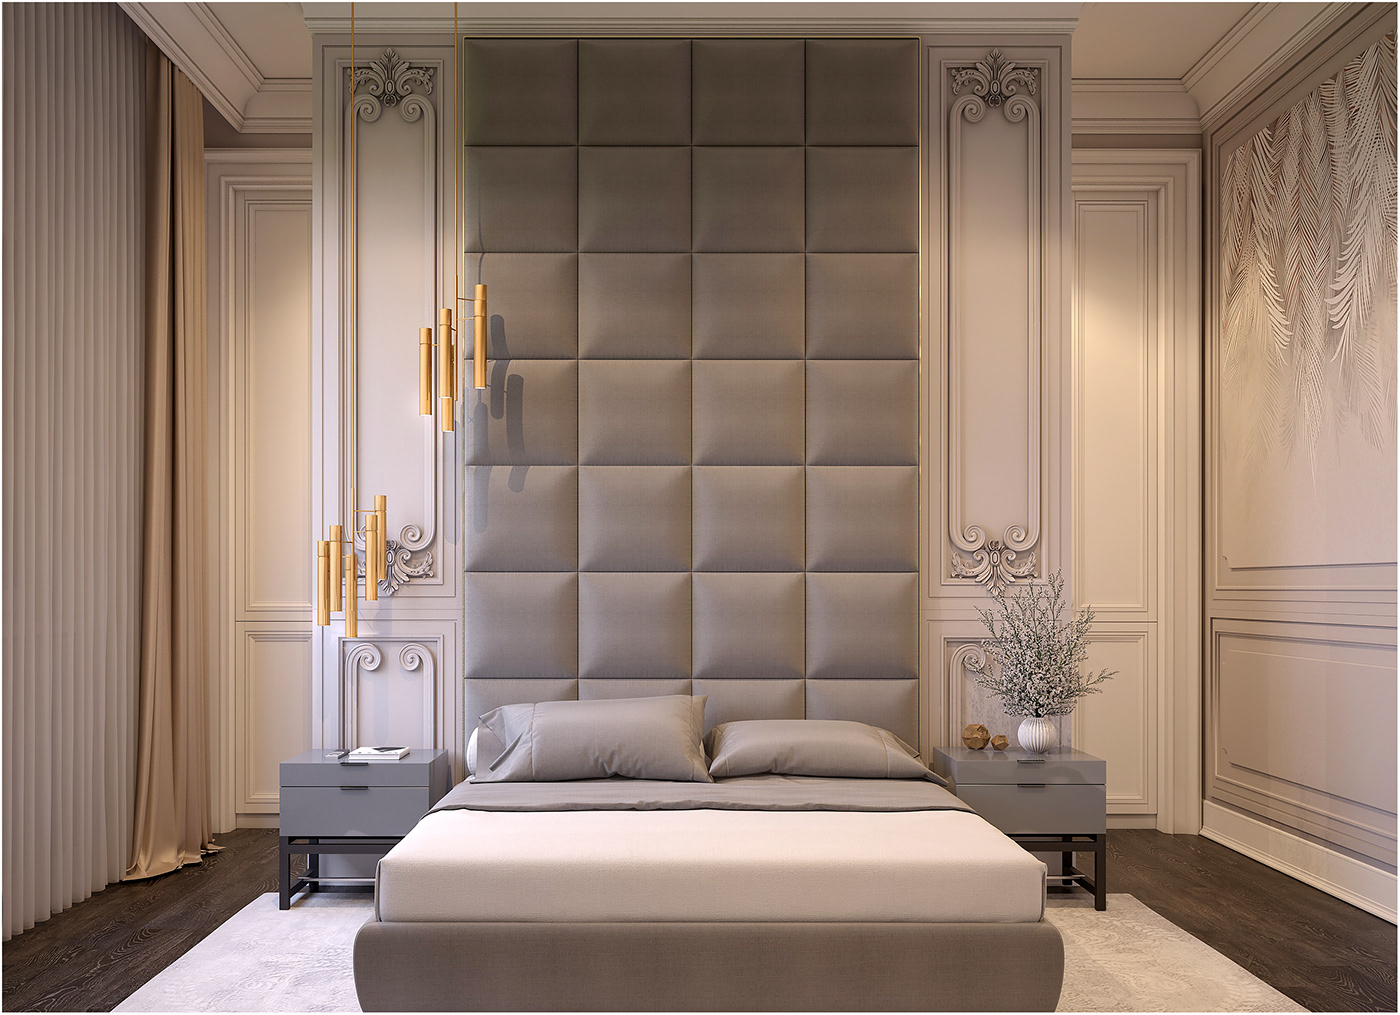 Interior bedroom luxury grey girl room